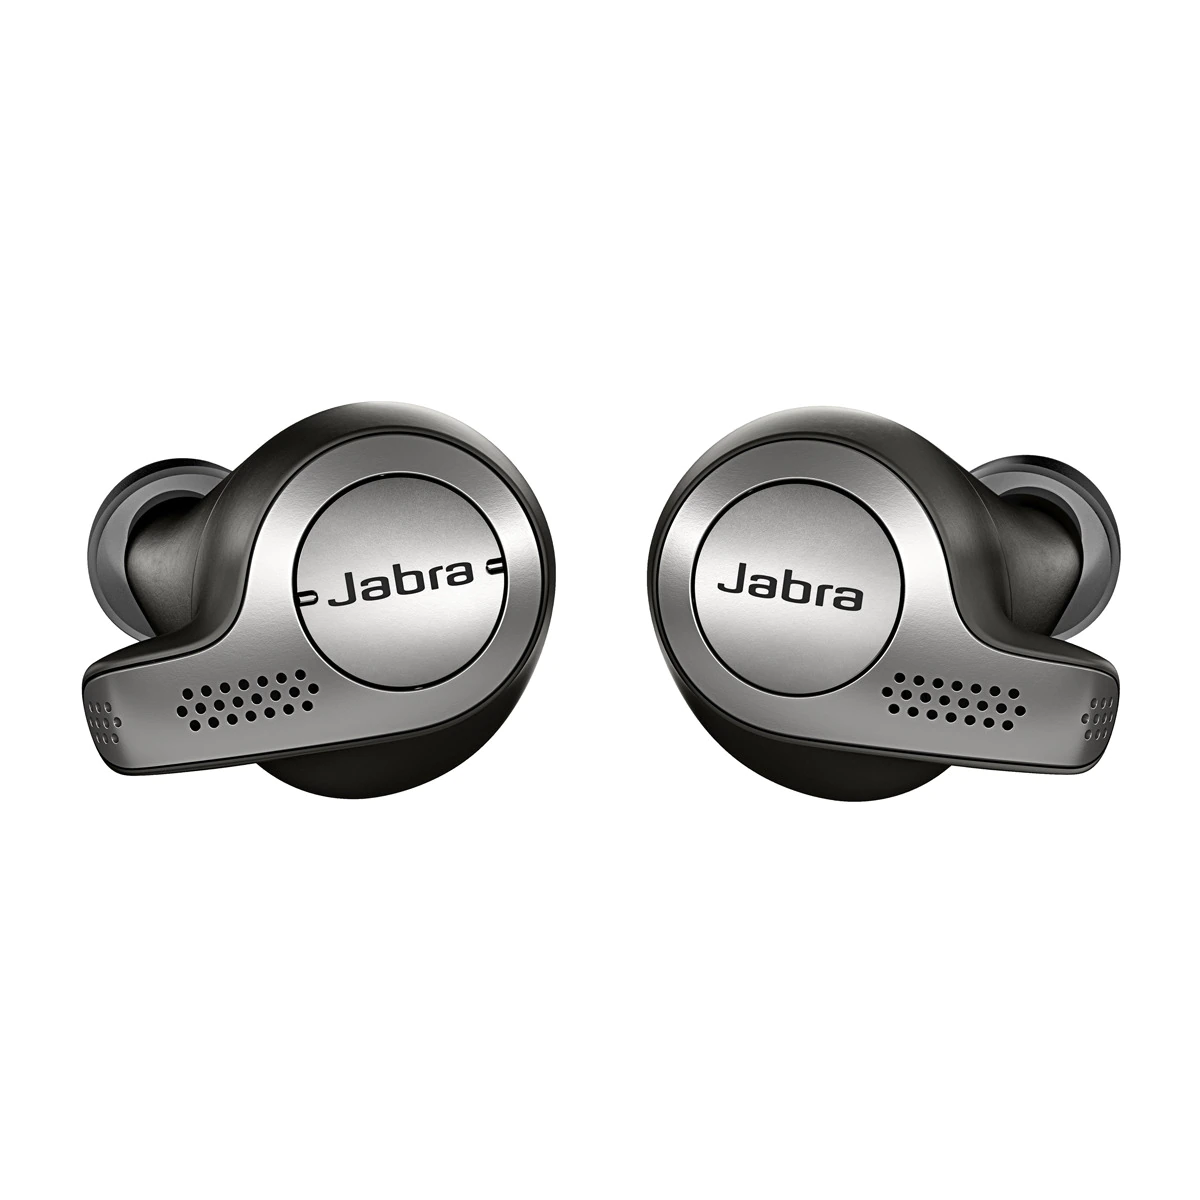 Auriculares de botón Jabra Elite 65t negro y titanio True Wireless Bluetooth